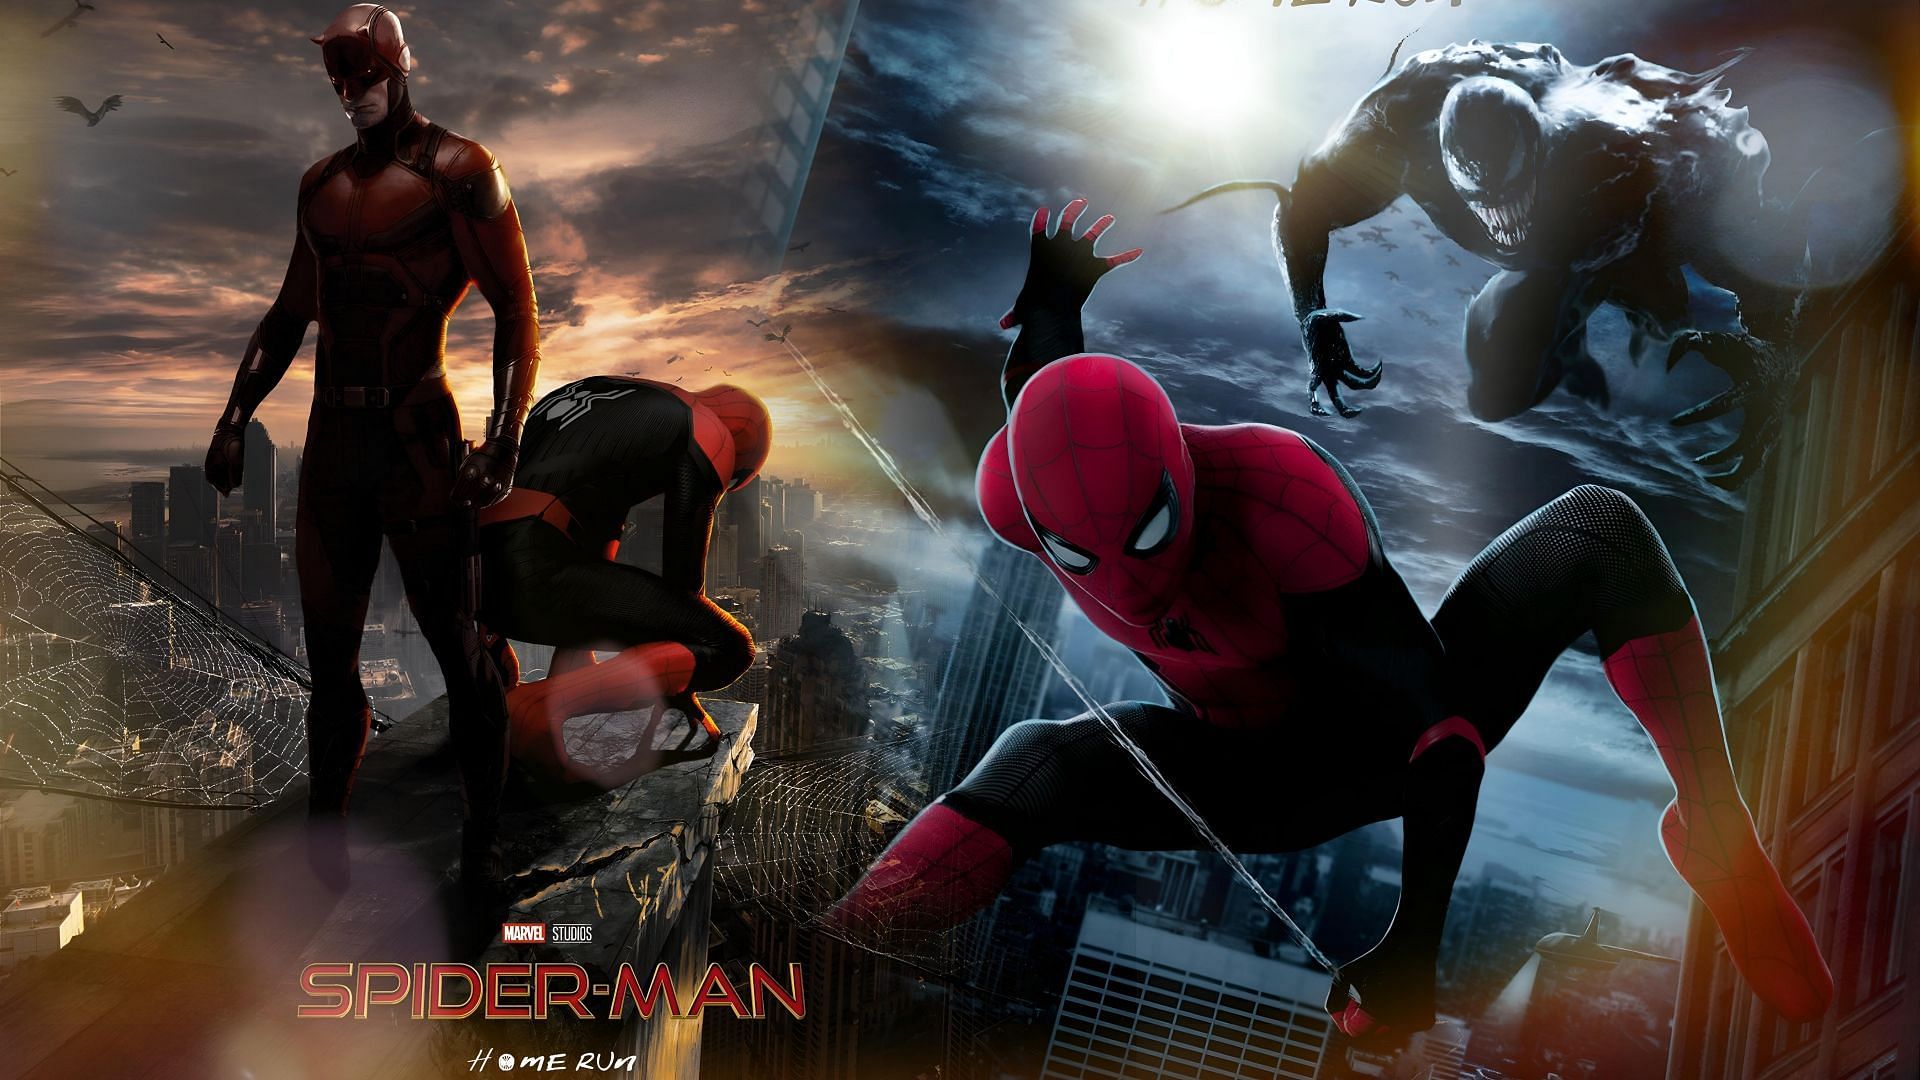  Spider-man 4 is finally set to hit theaters. (Image Via Sportskeeda)